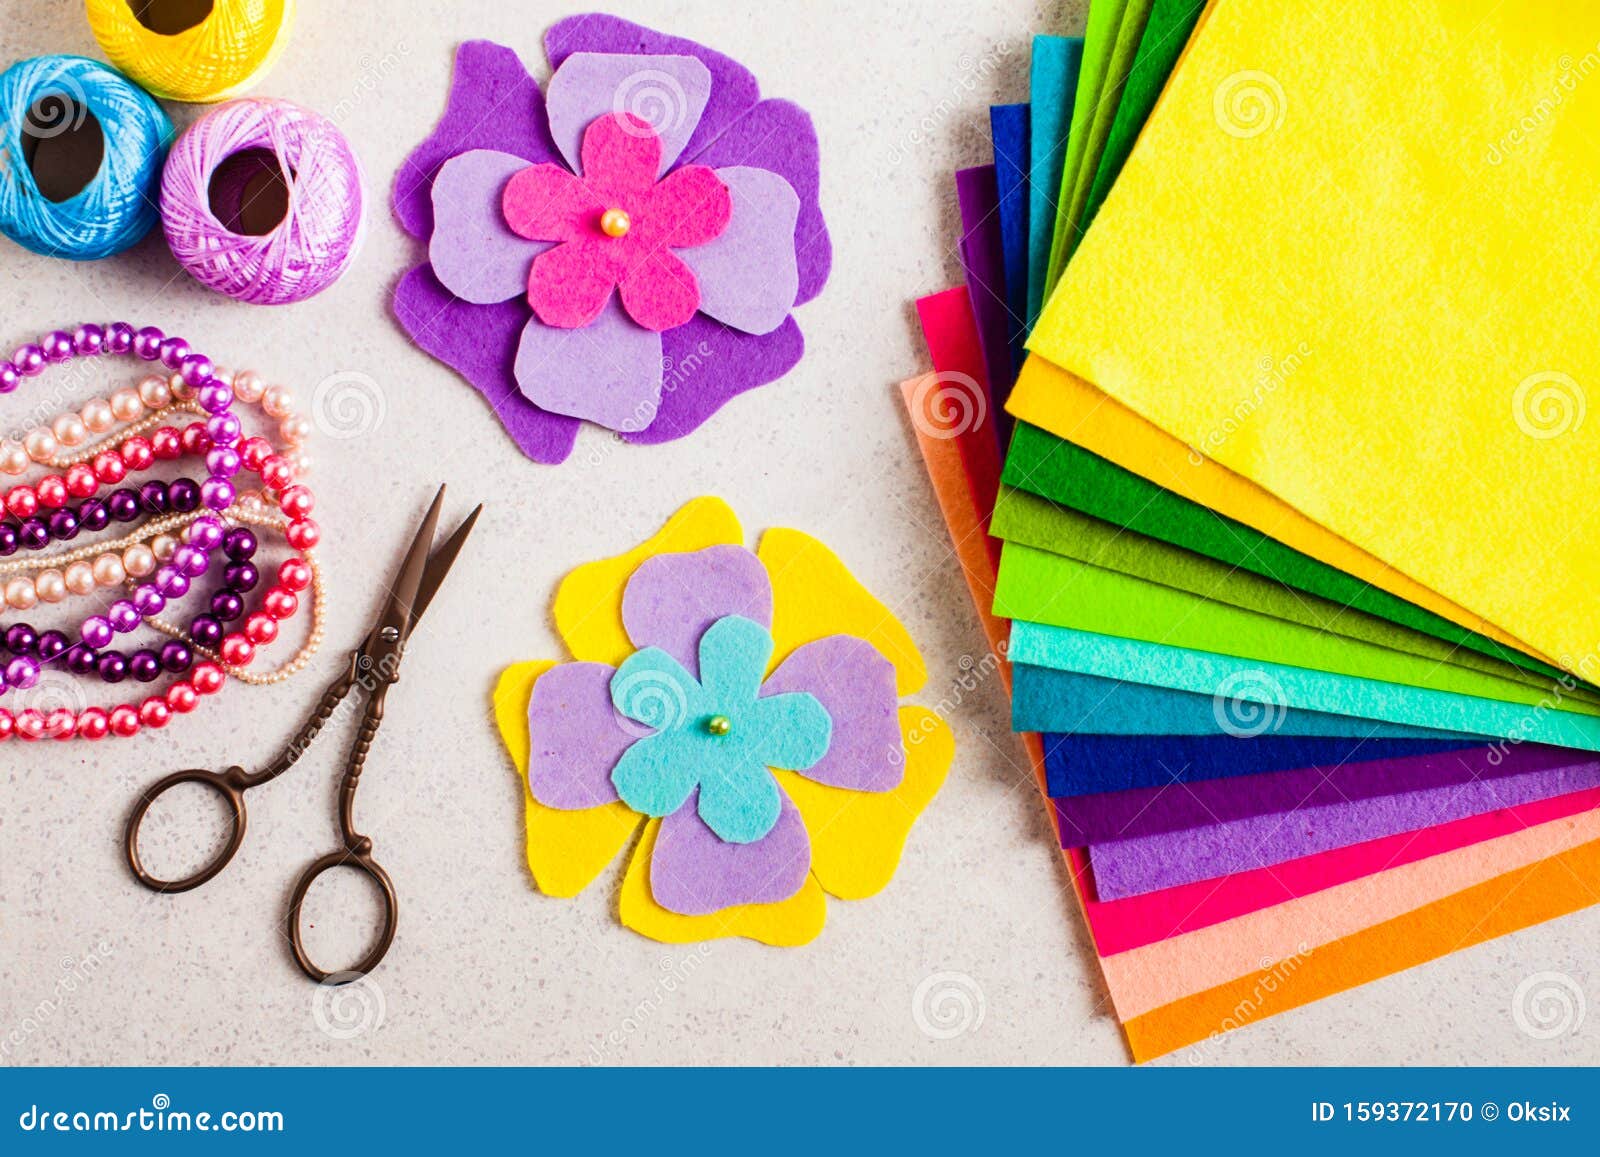 https://thumbs.dreamstime.com/z/top-view-felt-decorations-scissors-beads-kids-diy-crafts-tutorial-159372170.jpg